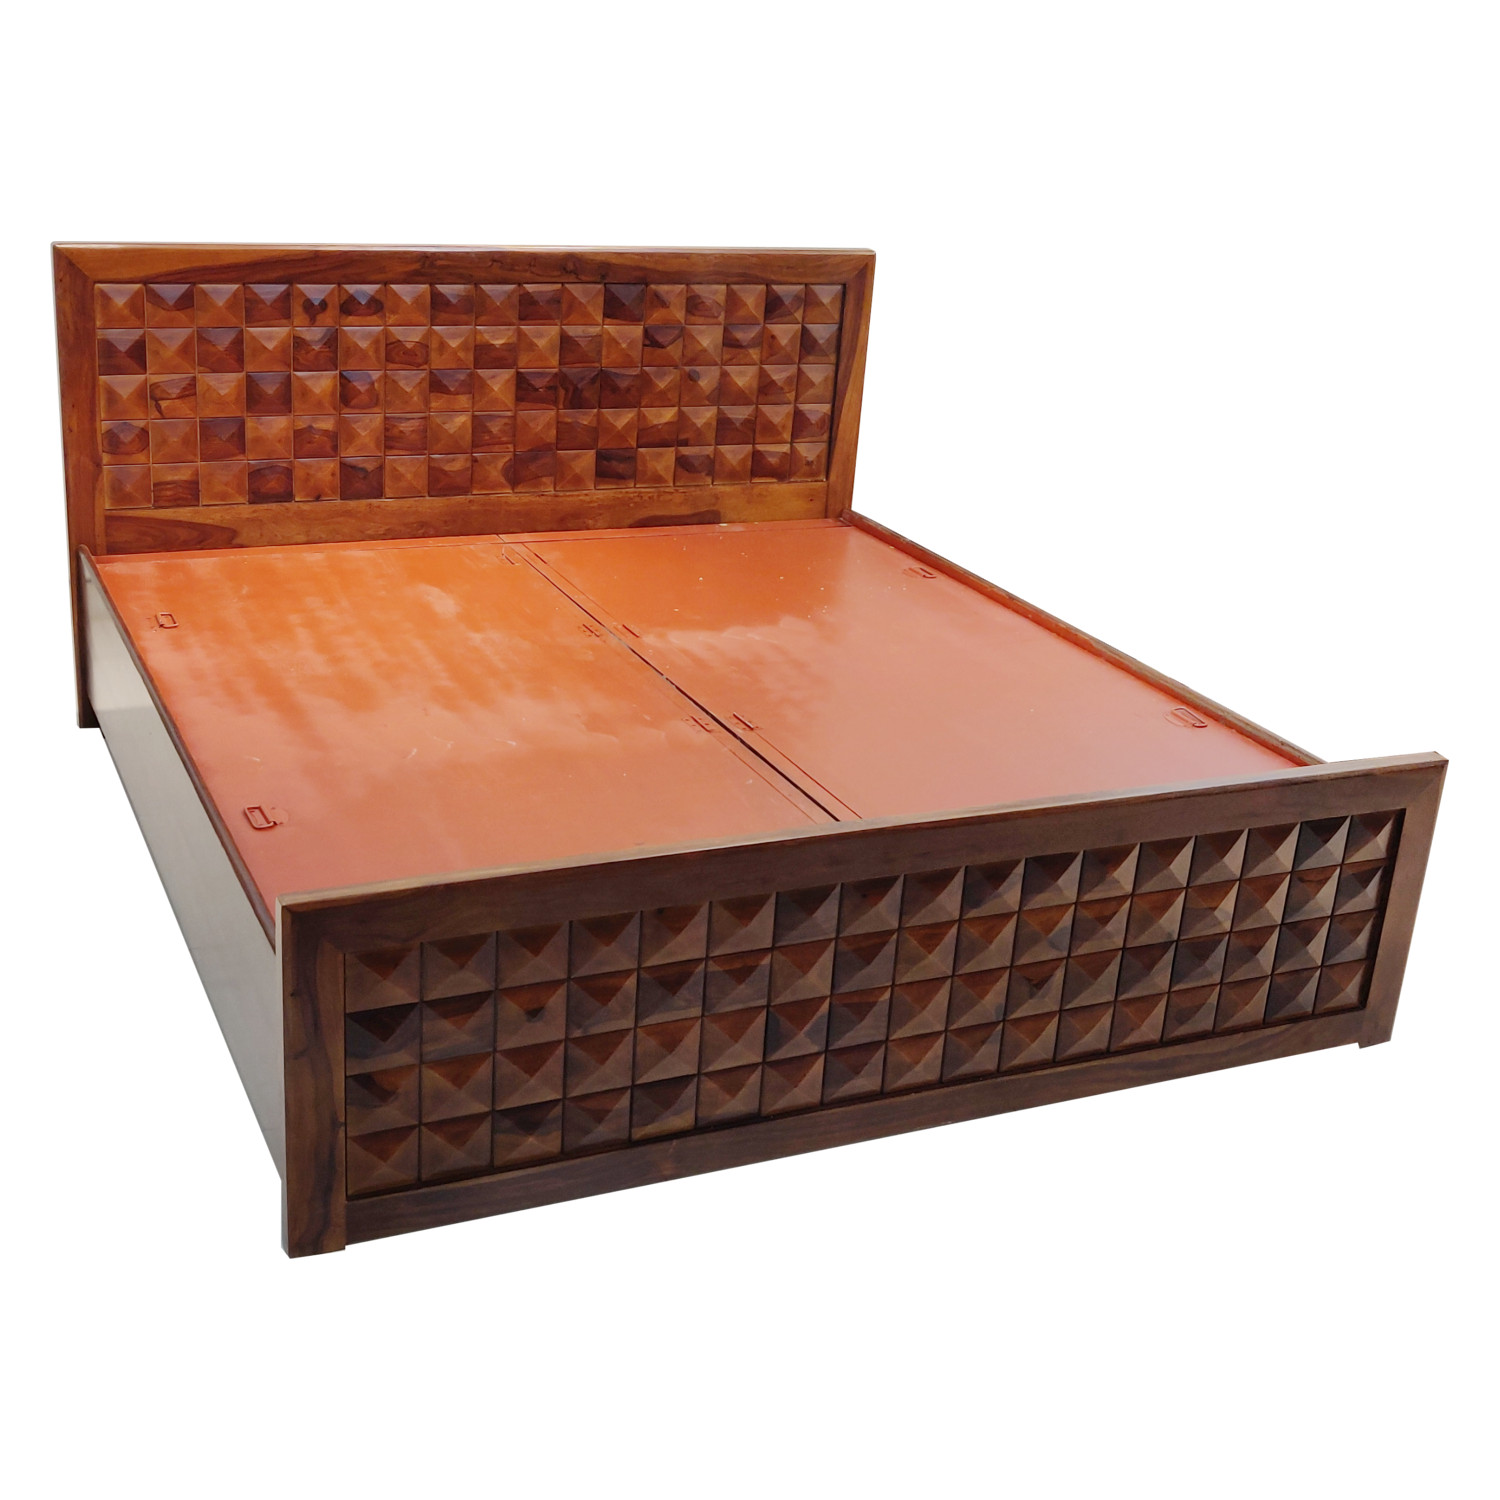 Amaltas Diamond Sheesham Wood Bed